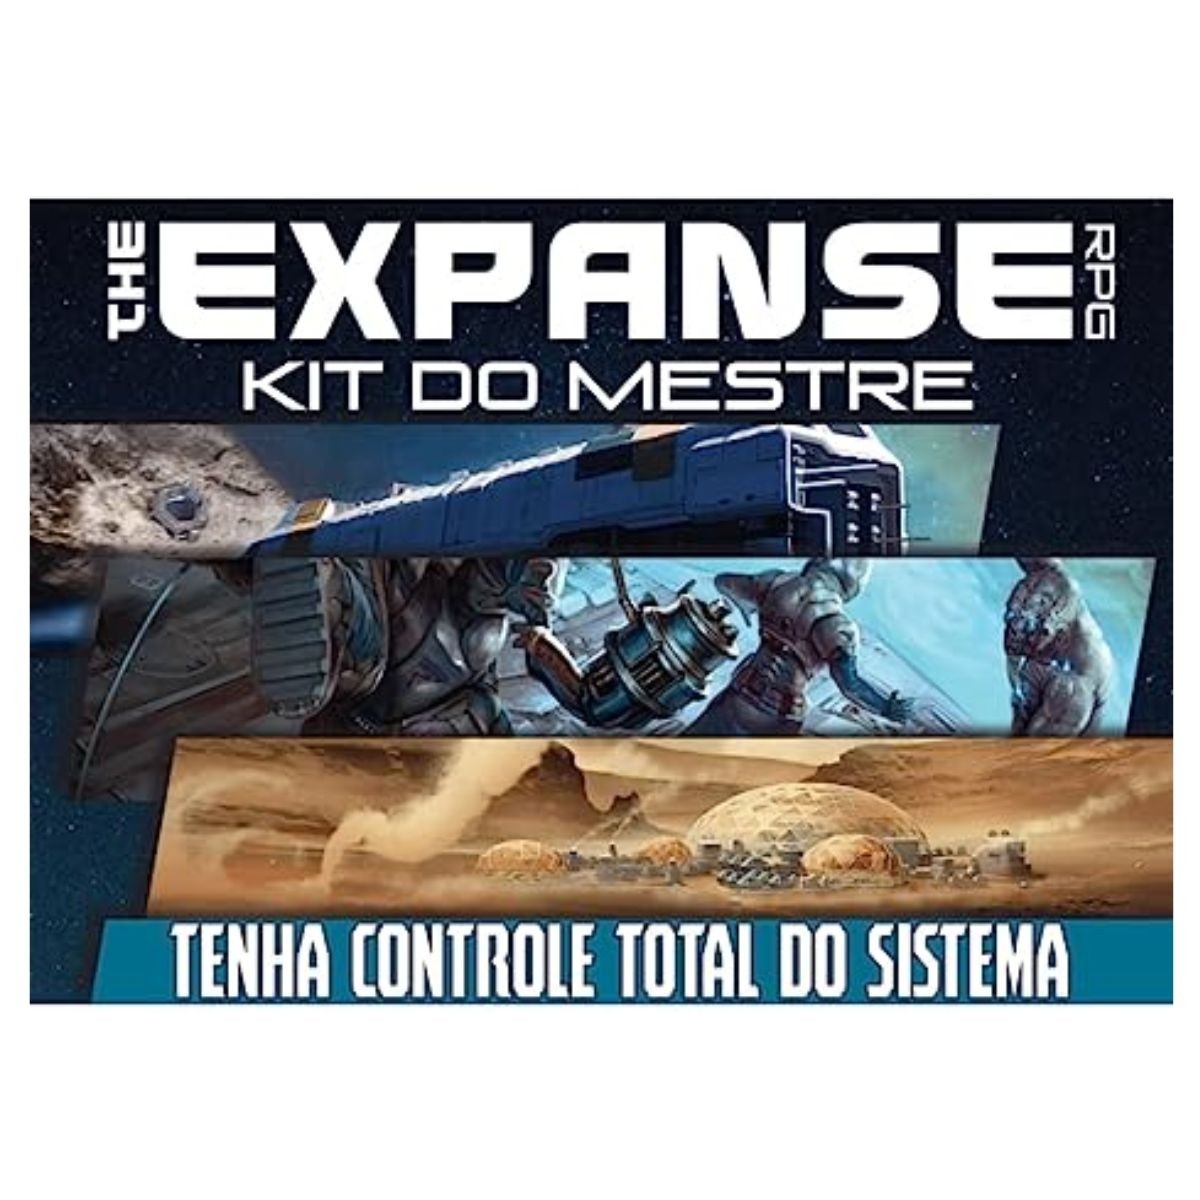 The Expanse RPG - Kit do Mestre - Jambô